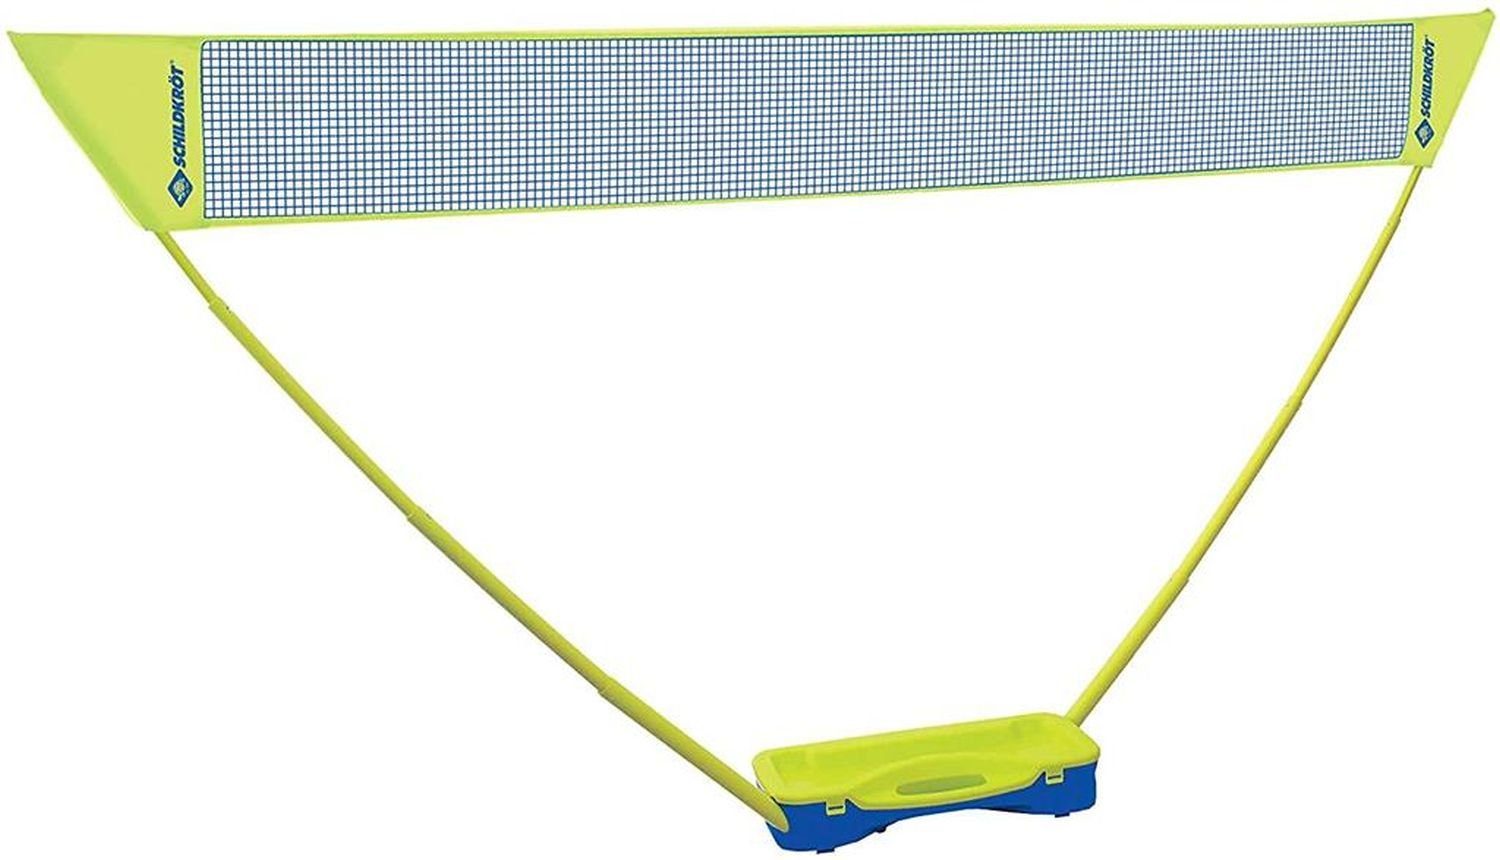 Schildkröt Badmintonschläger Compact Set